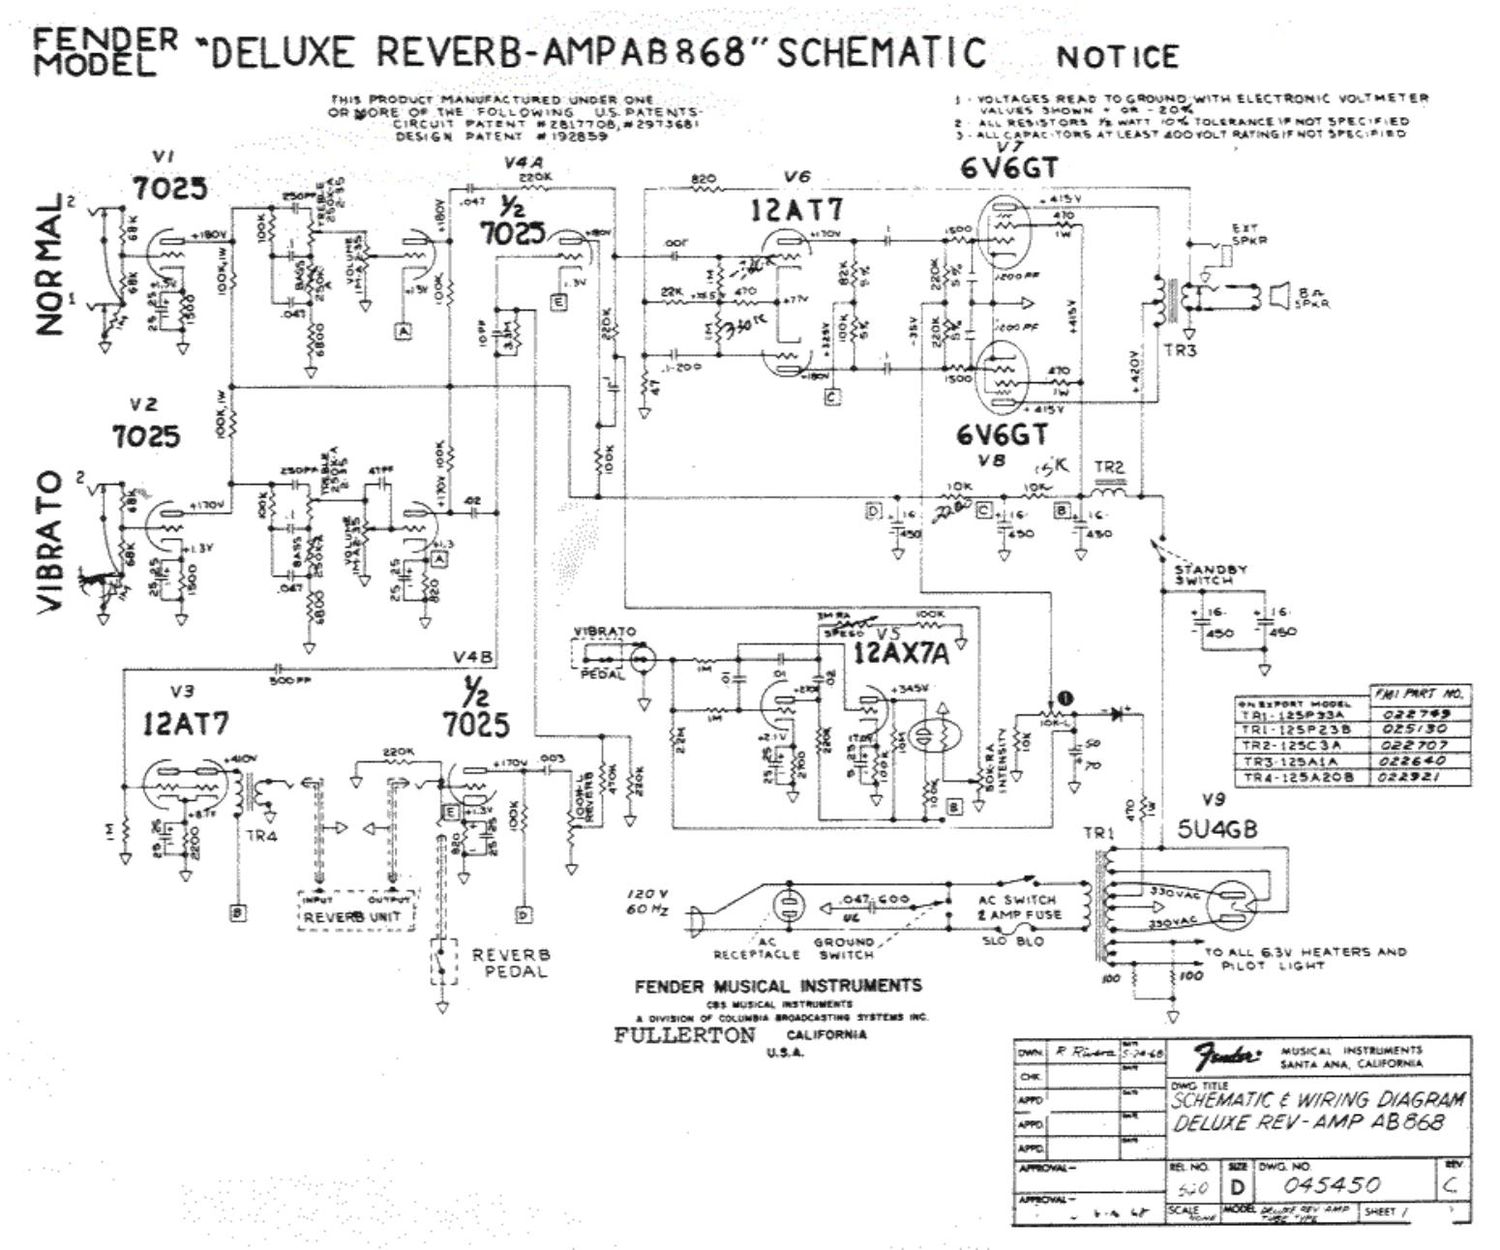 fender deluxe reverb ab868 schematic